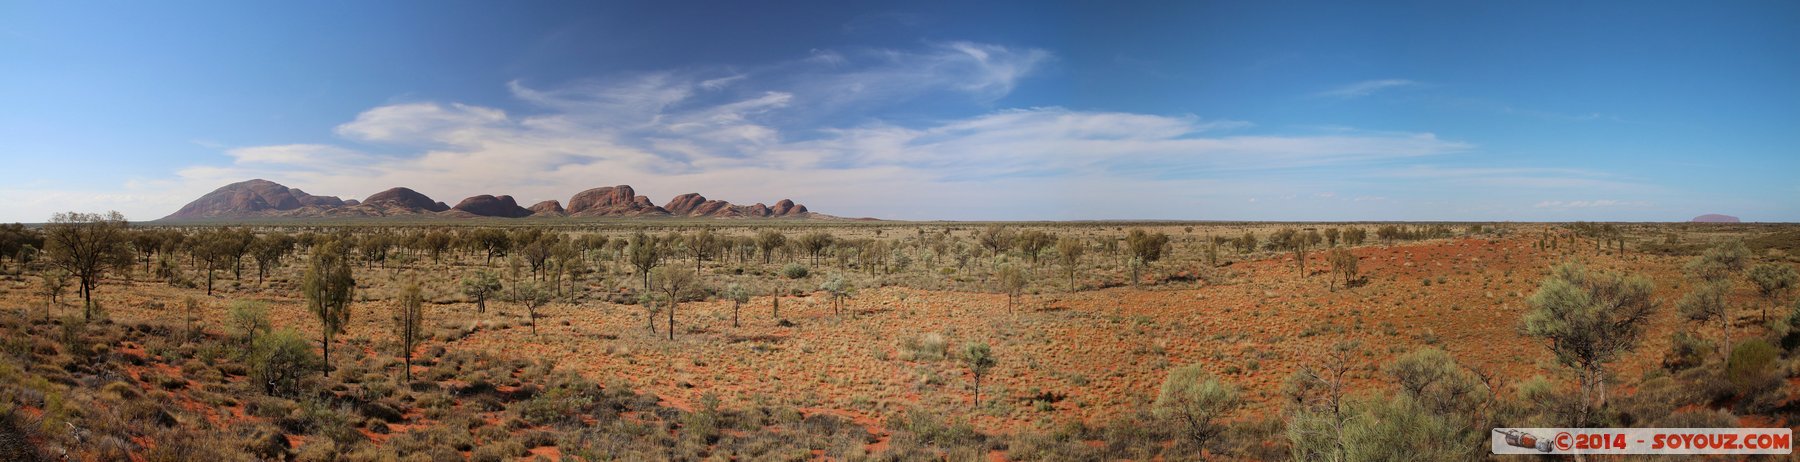 Kata Tjuta / The Olgas and Uluru - Panorama
Stitched Panorama
Mots-clés: AUS Australie geo:lat=-25.35102042 geo:lon=130.78663217 geotagged Northern Territory Uluru - Kata Tjuta National Park patrimoine unesco panorama animiste